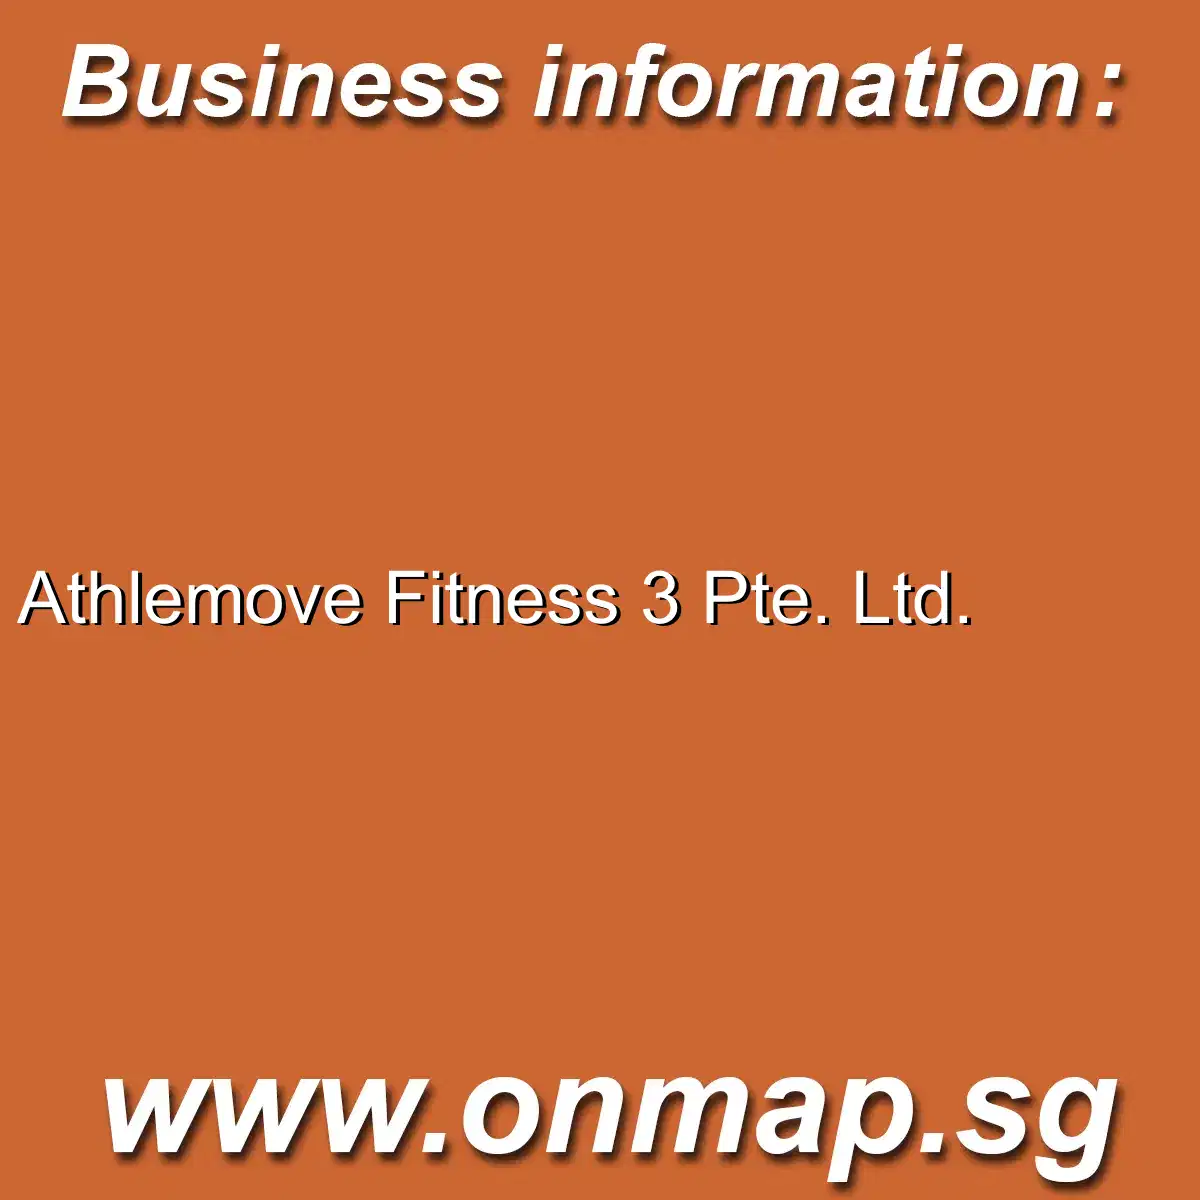 Athlemove Fitness 3 Pte. Ltd.